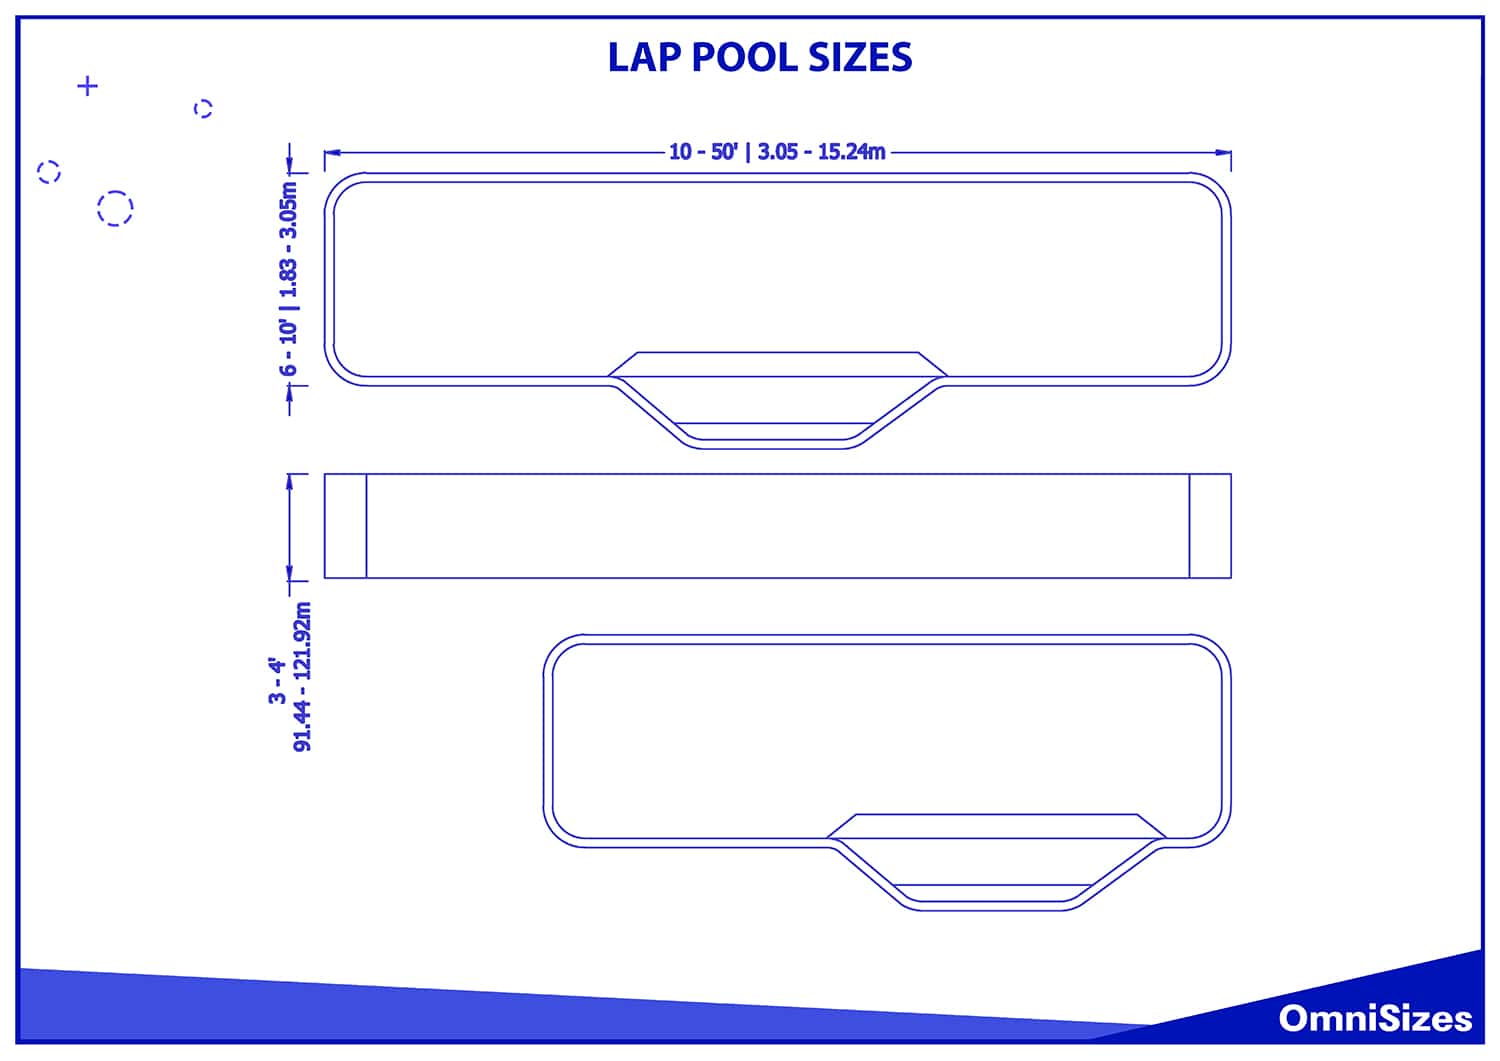 Lap pool sizes